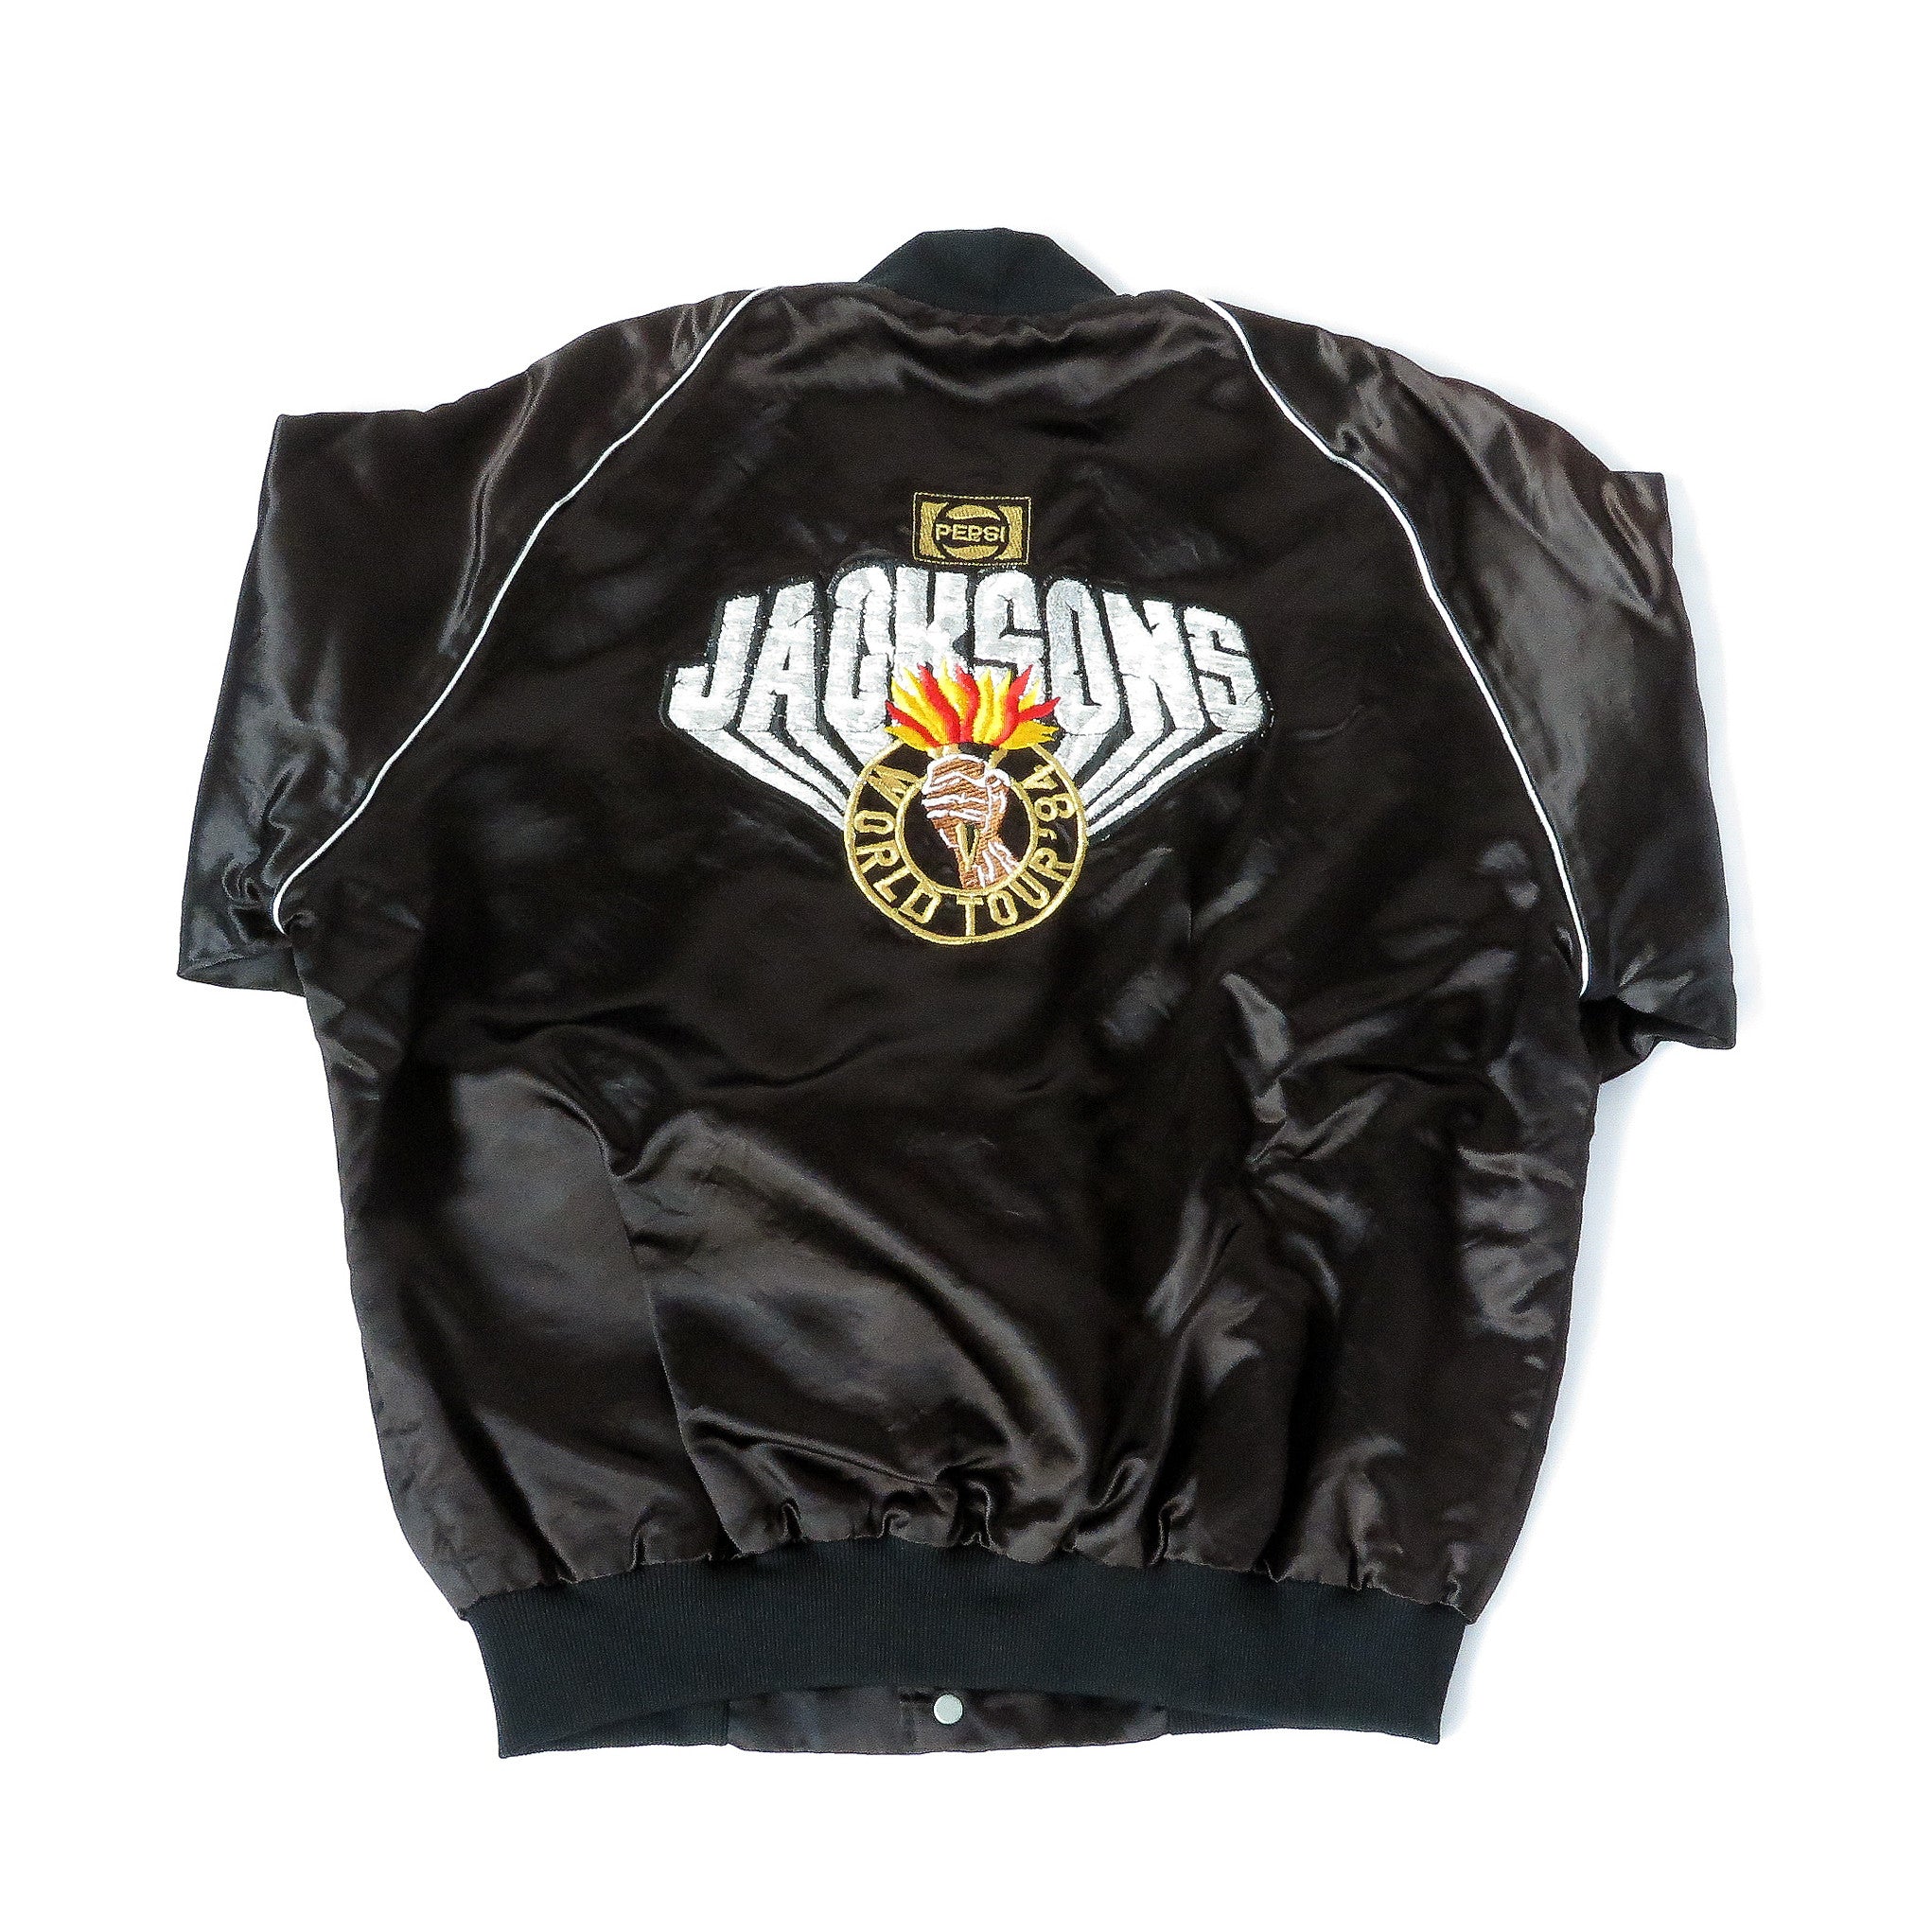 Vintage Jacksons 1984 World Tour Jacket Sz S